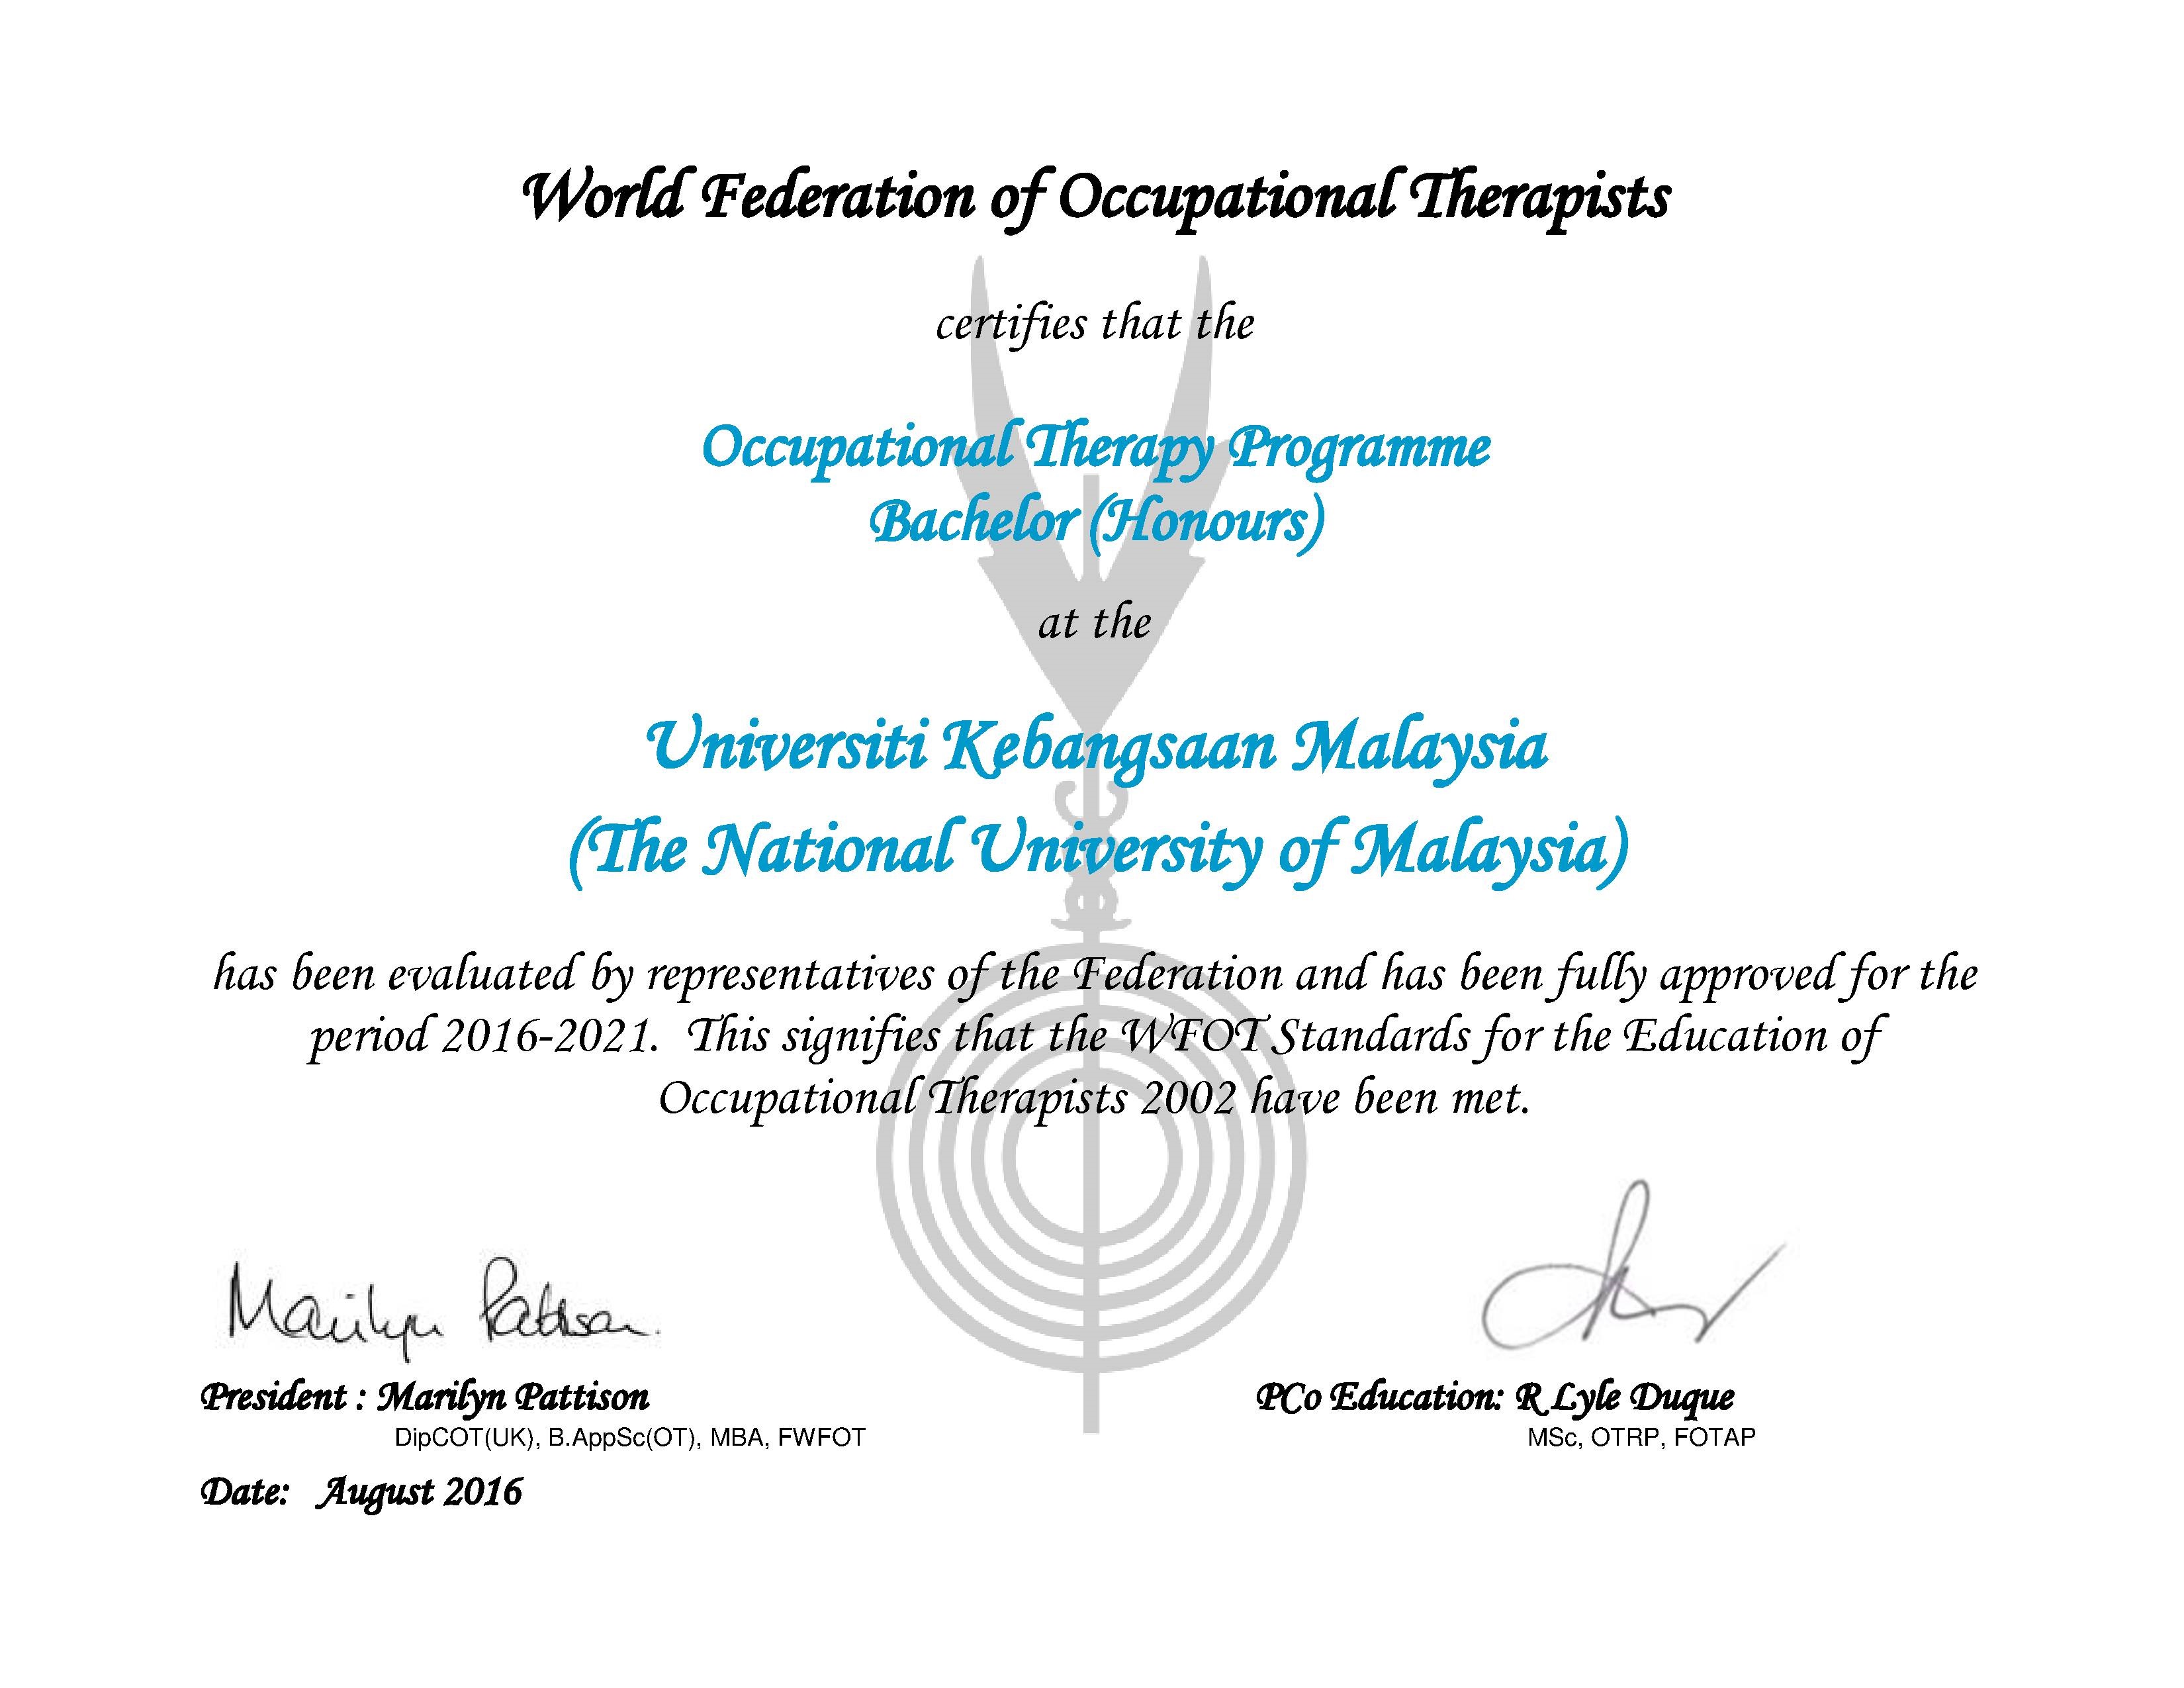 ot-ukm-certificate-wfot